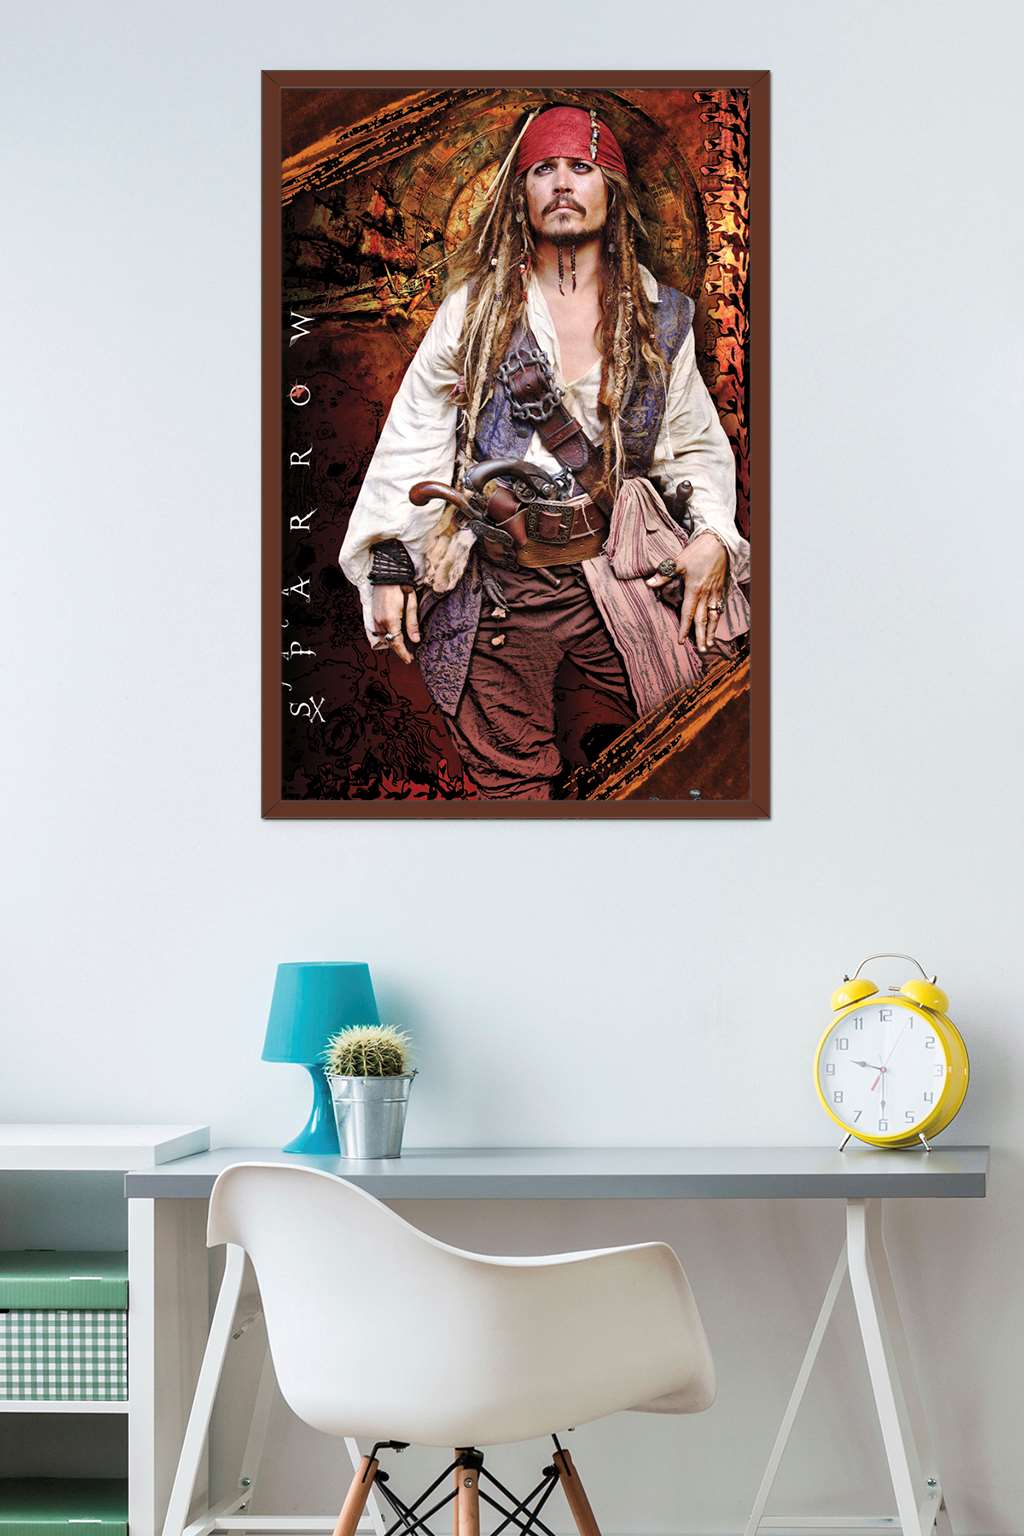 Disney Pirates of the Caribbean: On Stranger Tides - Johnny Depp Wall Poster, 22.375" x 34", Framed - image 2 of 2